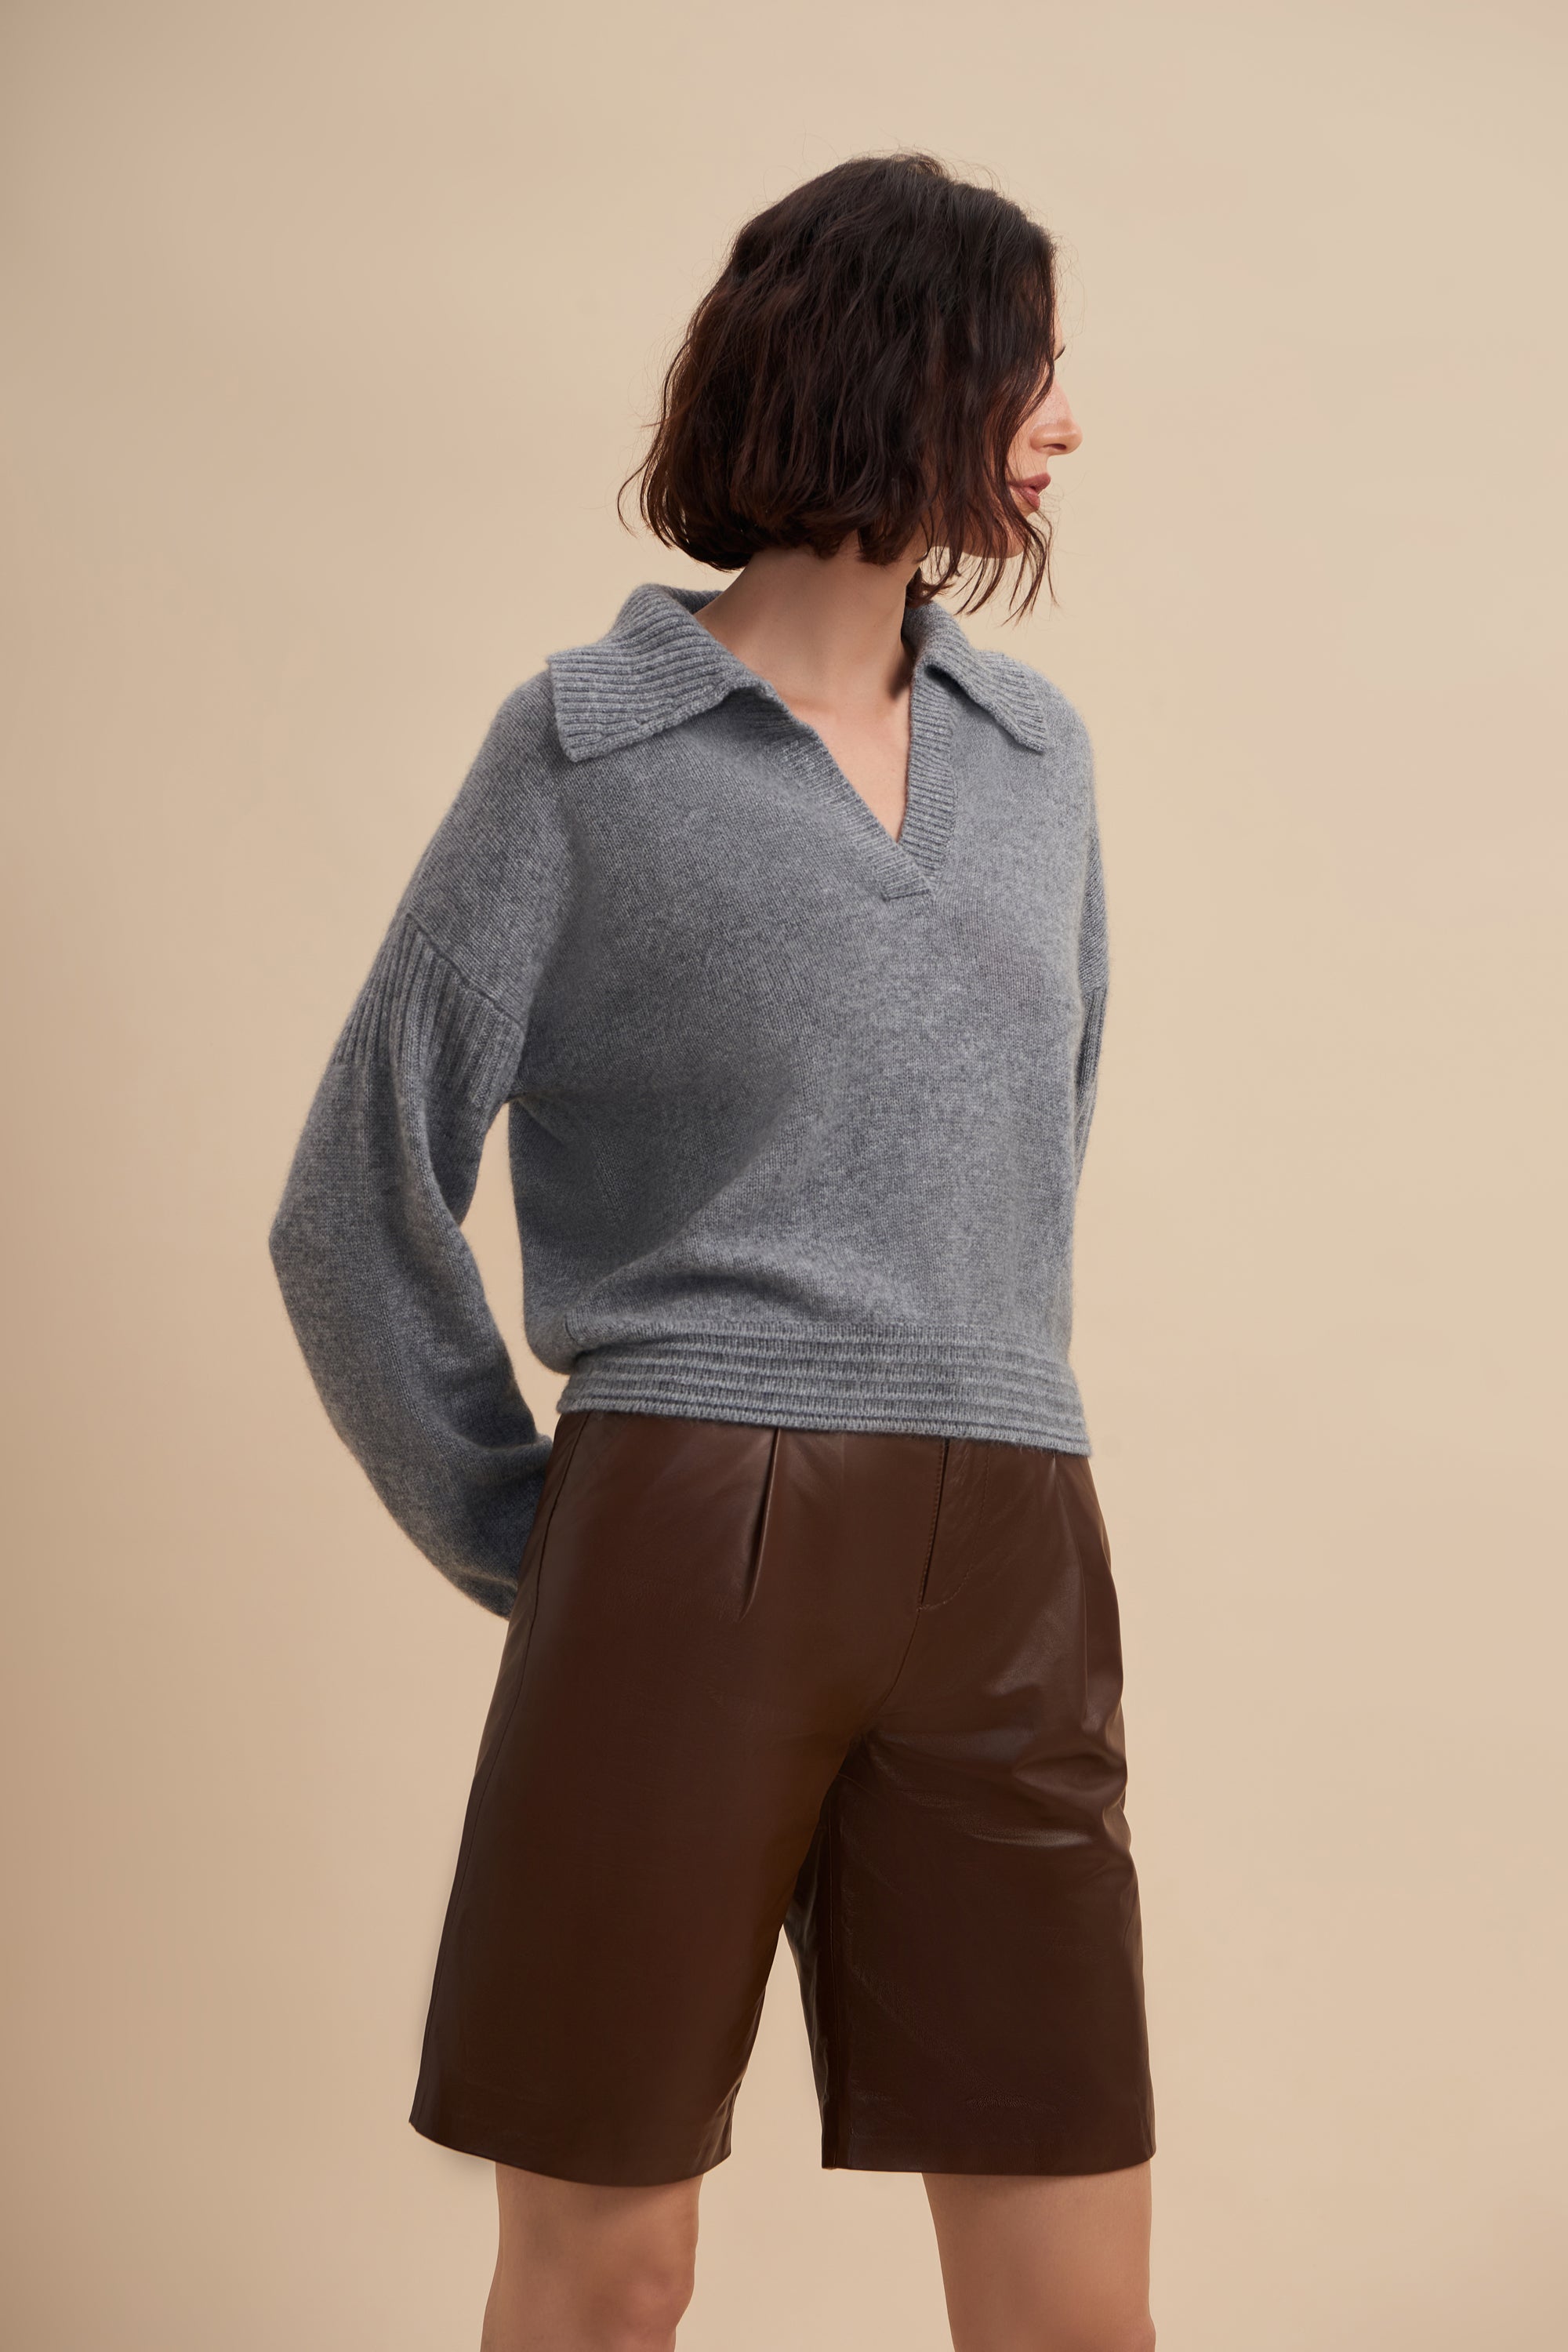 sweater with collar, collar sweater, collared sweater, knit polo shirt, polo shirt sweater, grey cashmere sweater, grey sweater